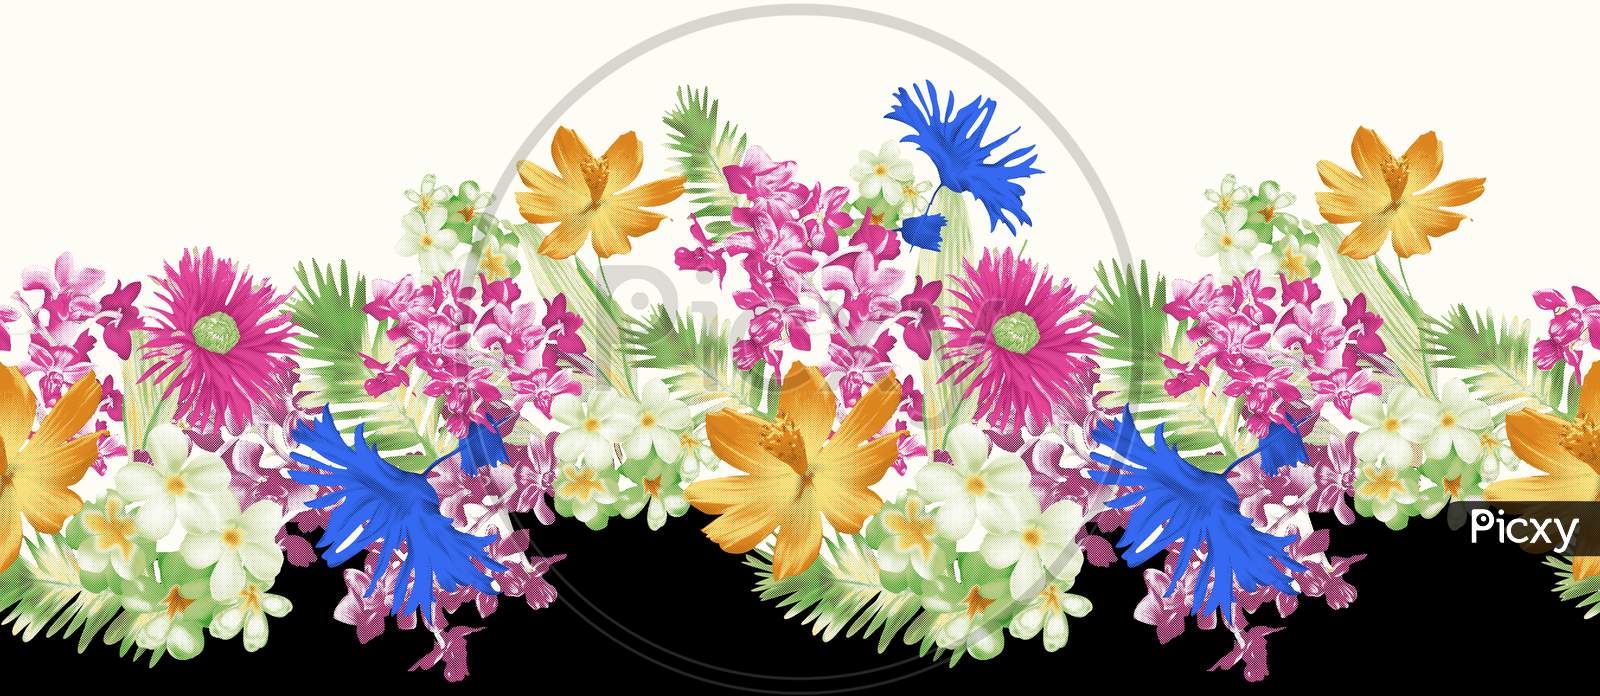 Flower Bodar Design Background For Print, Textile, Wear, Magazines, Template, Card, Poster, Brochure. Bright Colors